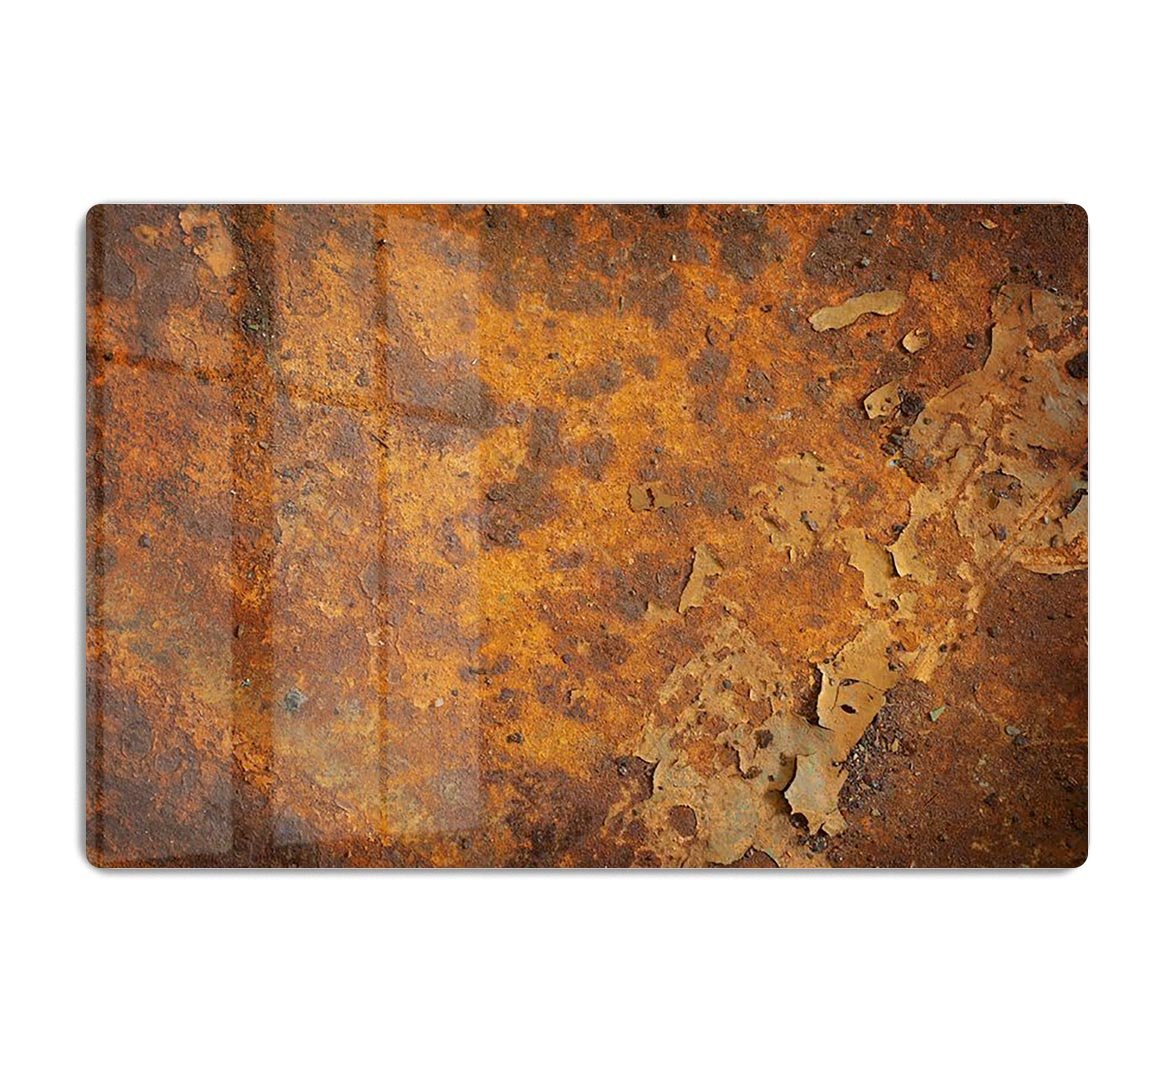 Orange rust grunge abstract HD Metal Print - Canvas Art Rocks - 1